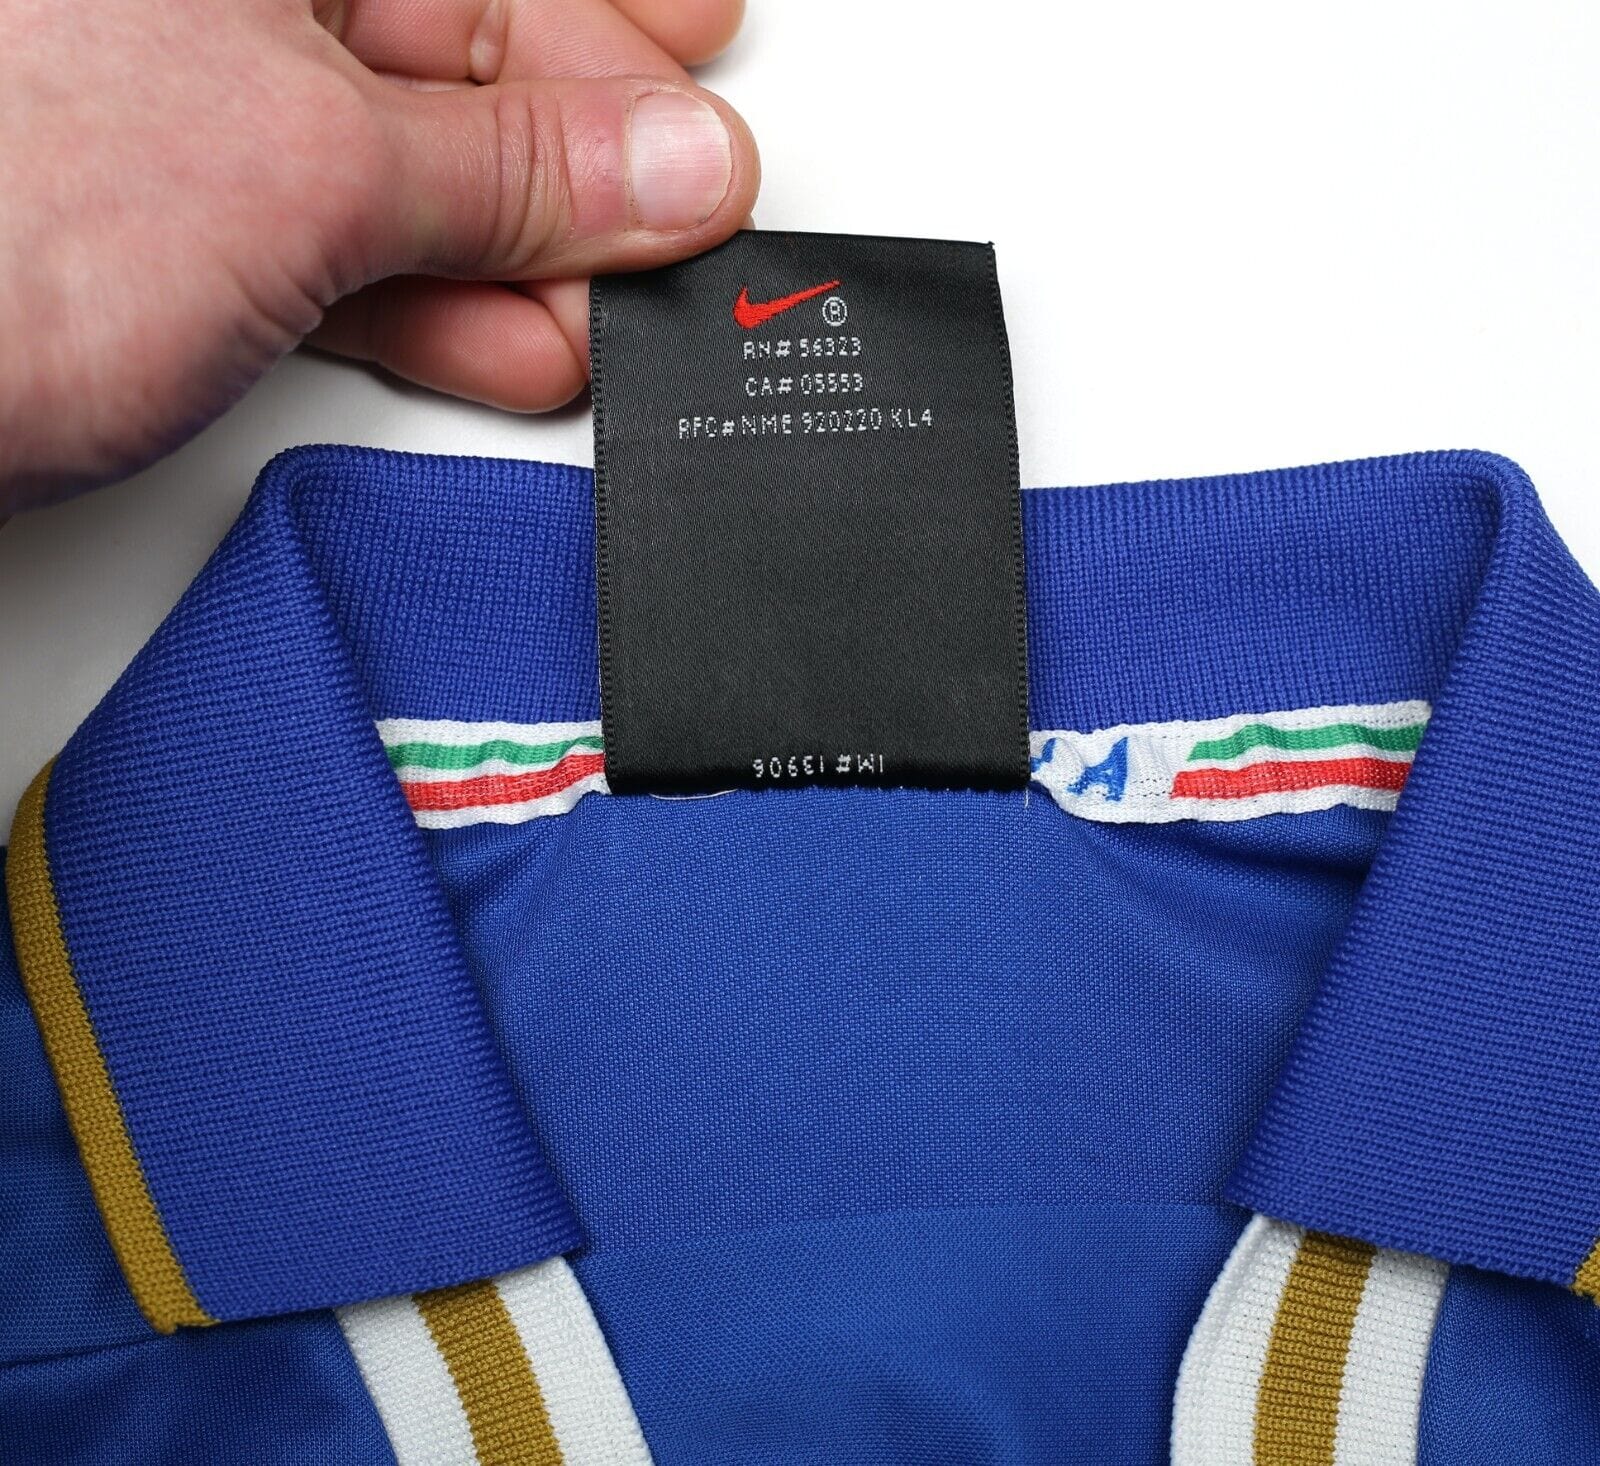 1996/97 MALDINI #3 Italy Vintage Nike Home Football Shirt (M) EURO 96